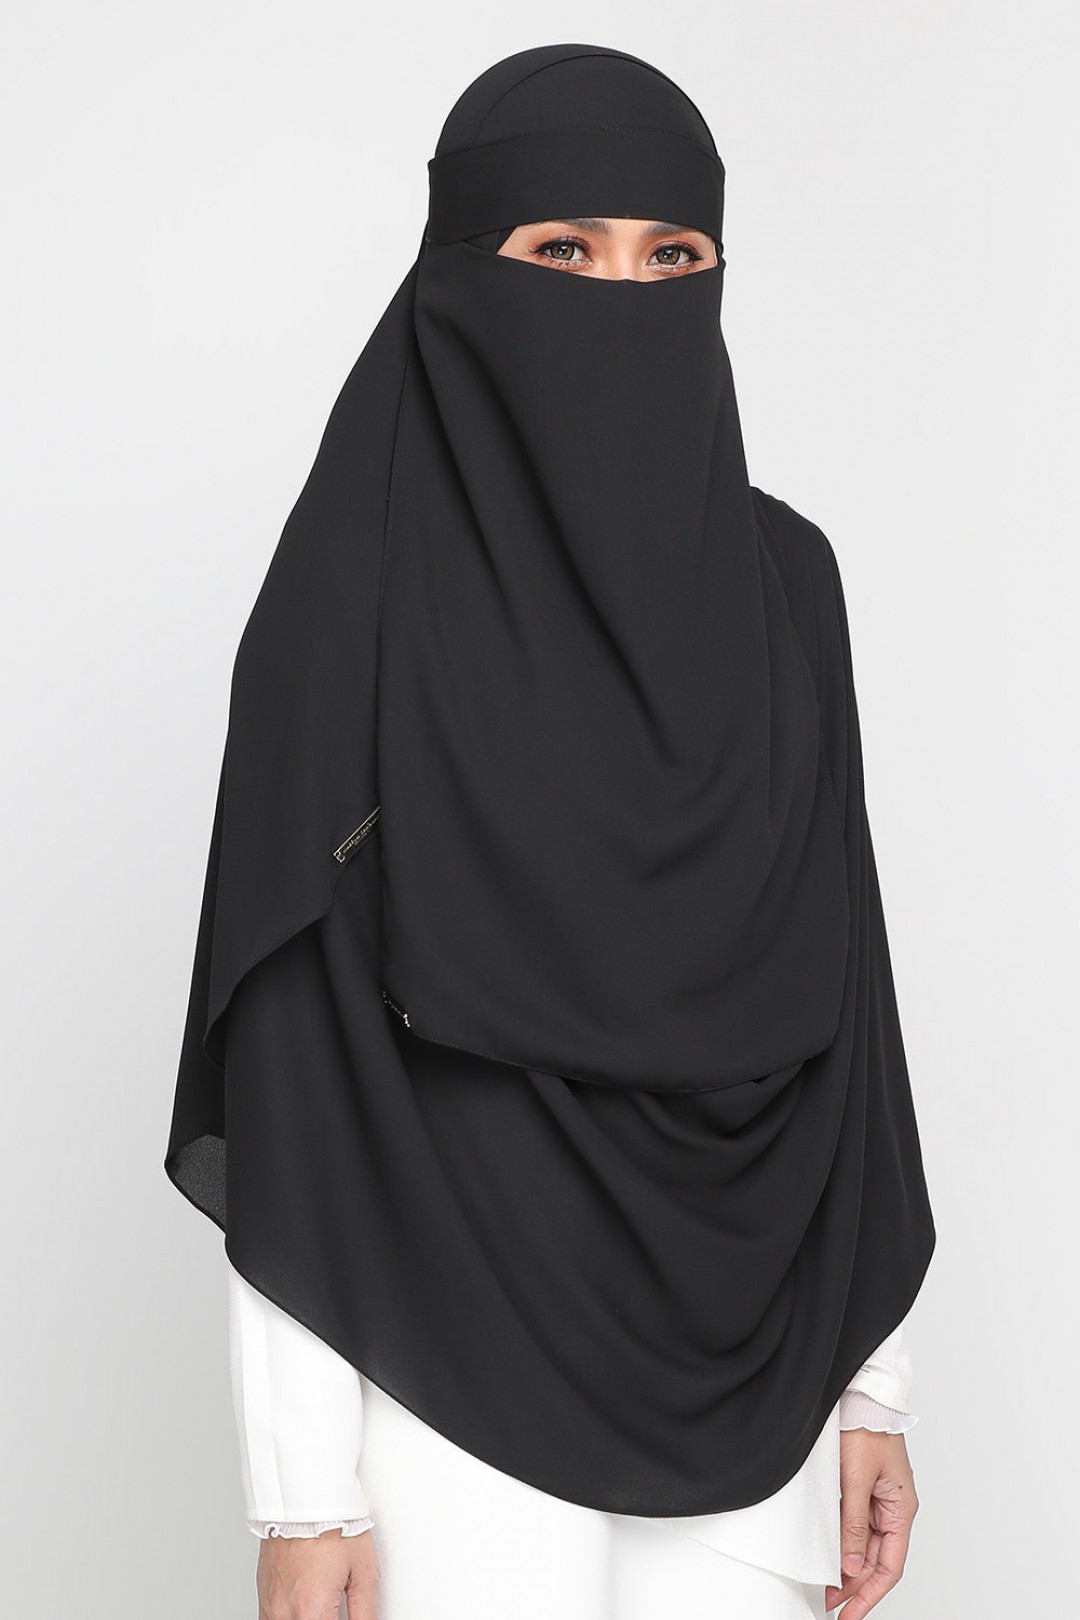 As-Is Niqab Dark Black